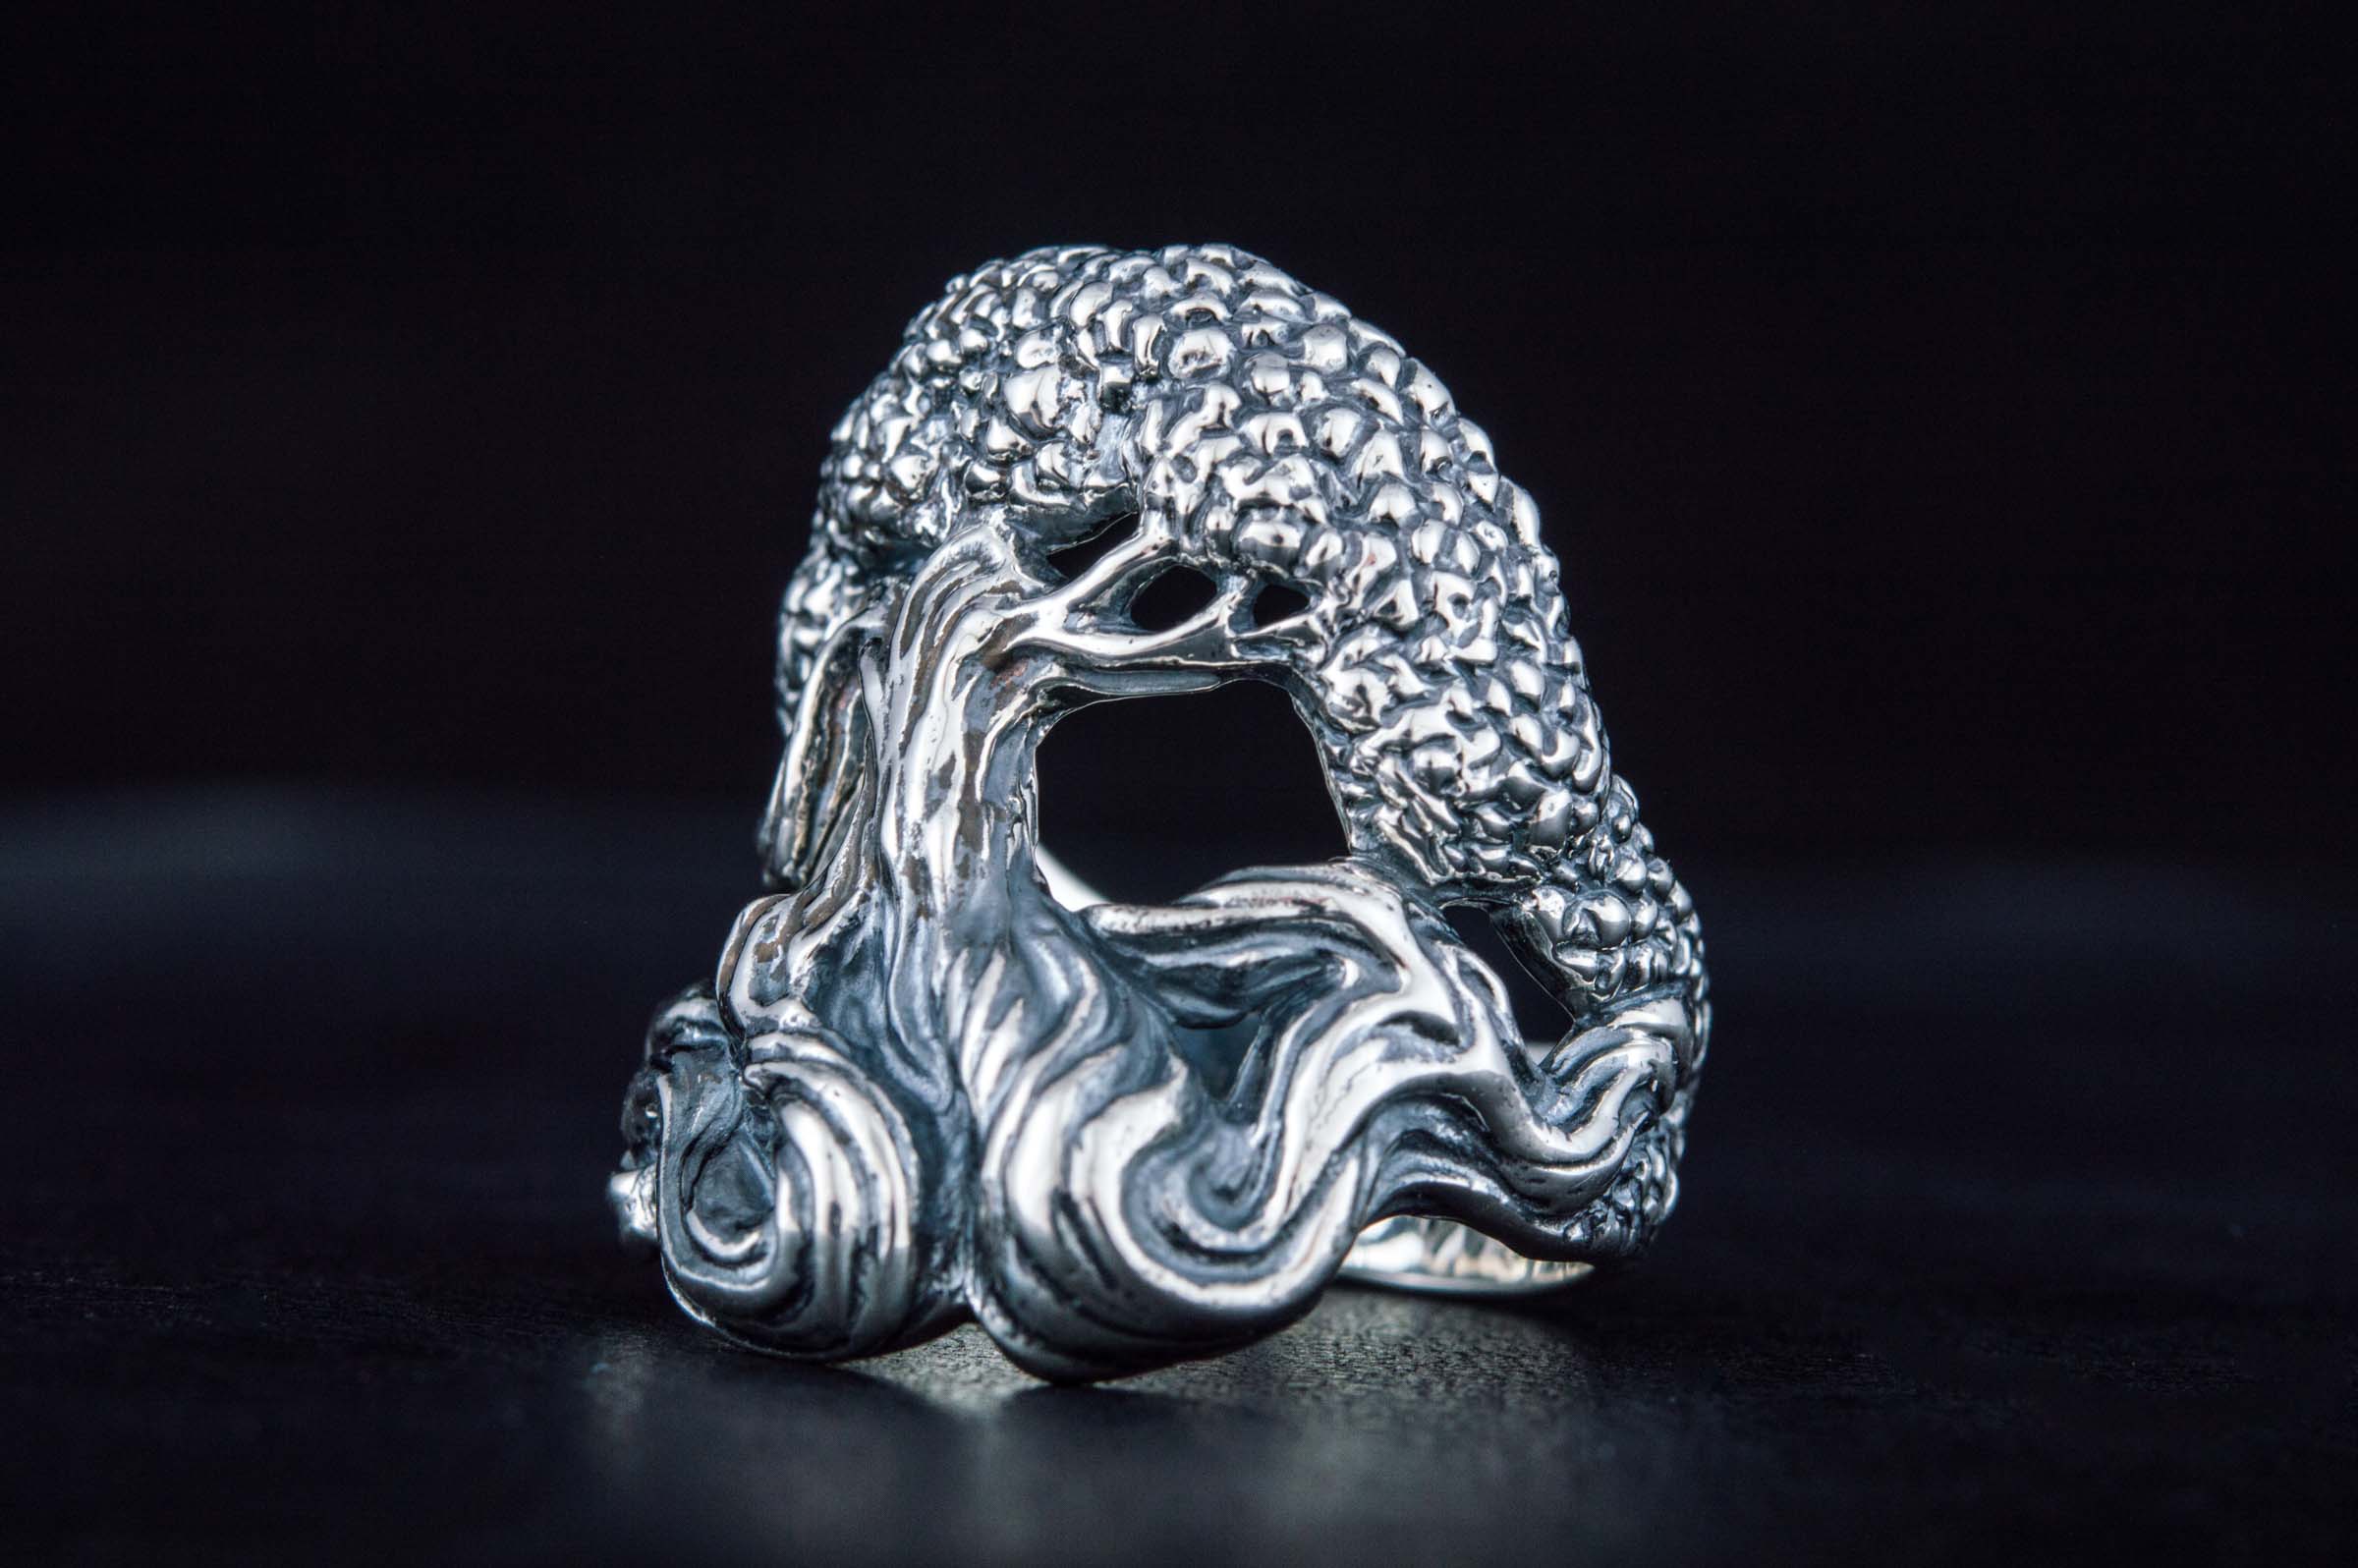 Yggdrasil World Tree Sterling Silver Viking Ring